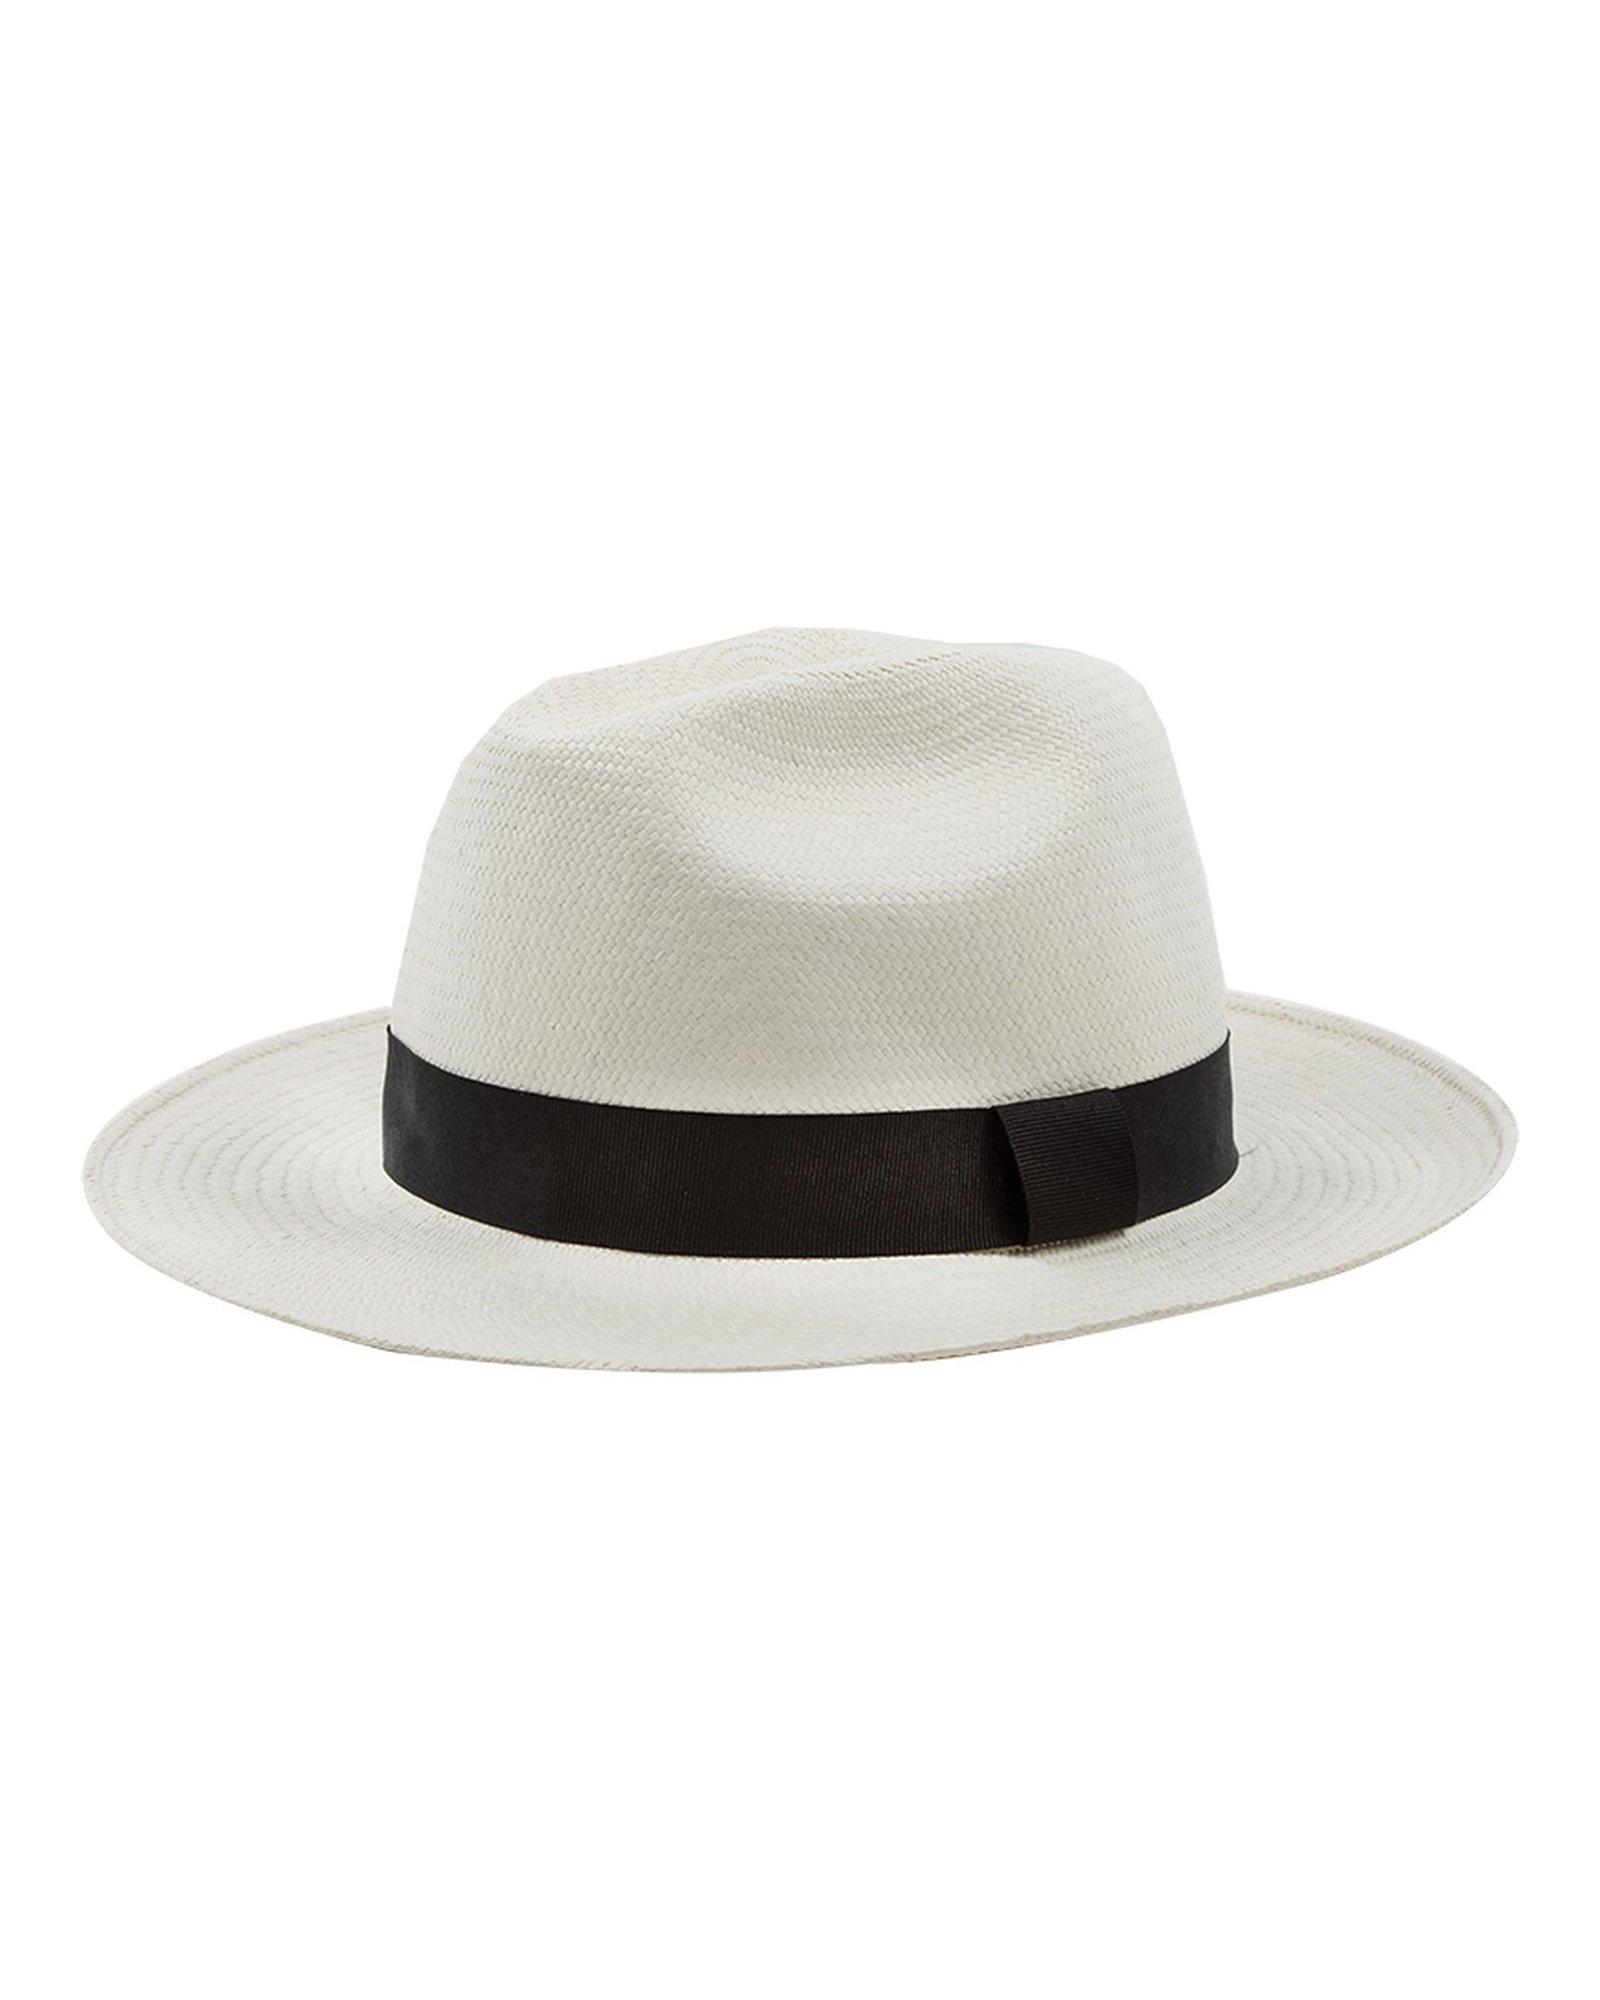 Cape Union Men's Deventio Panama Hat